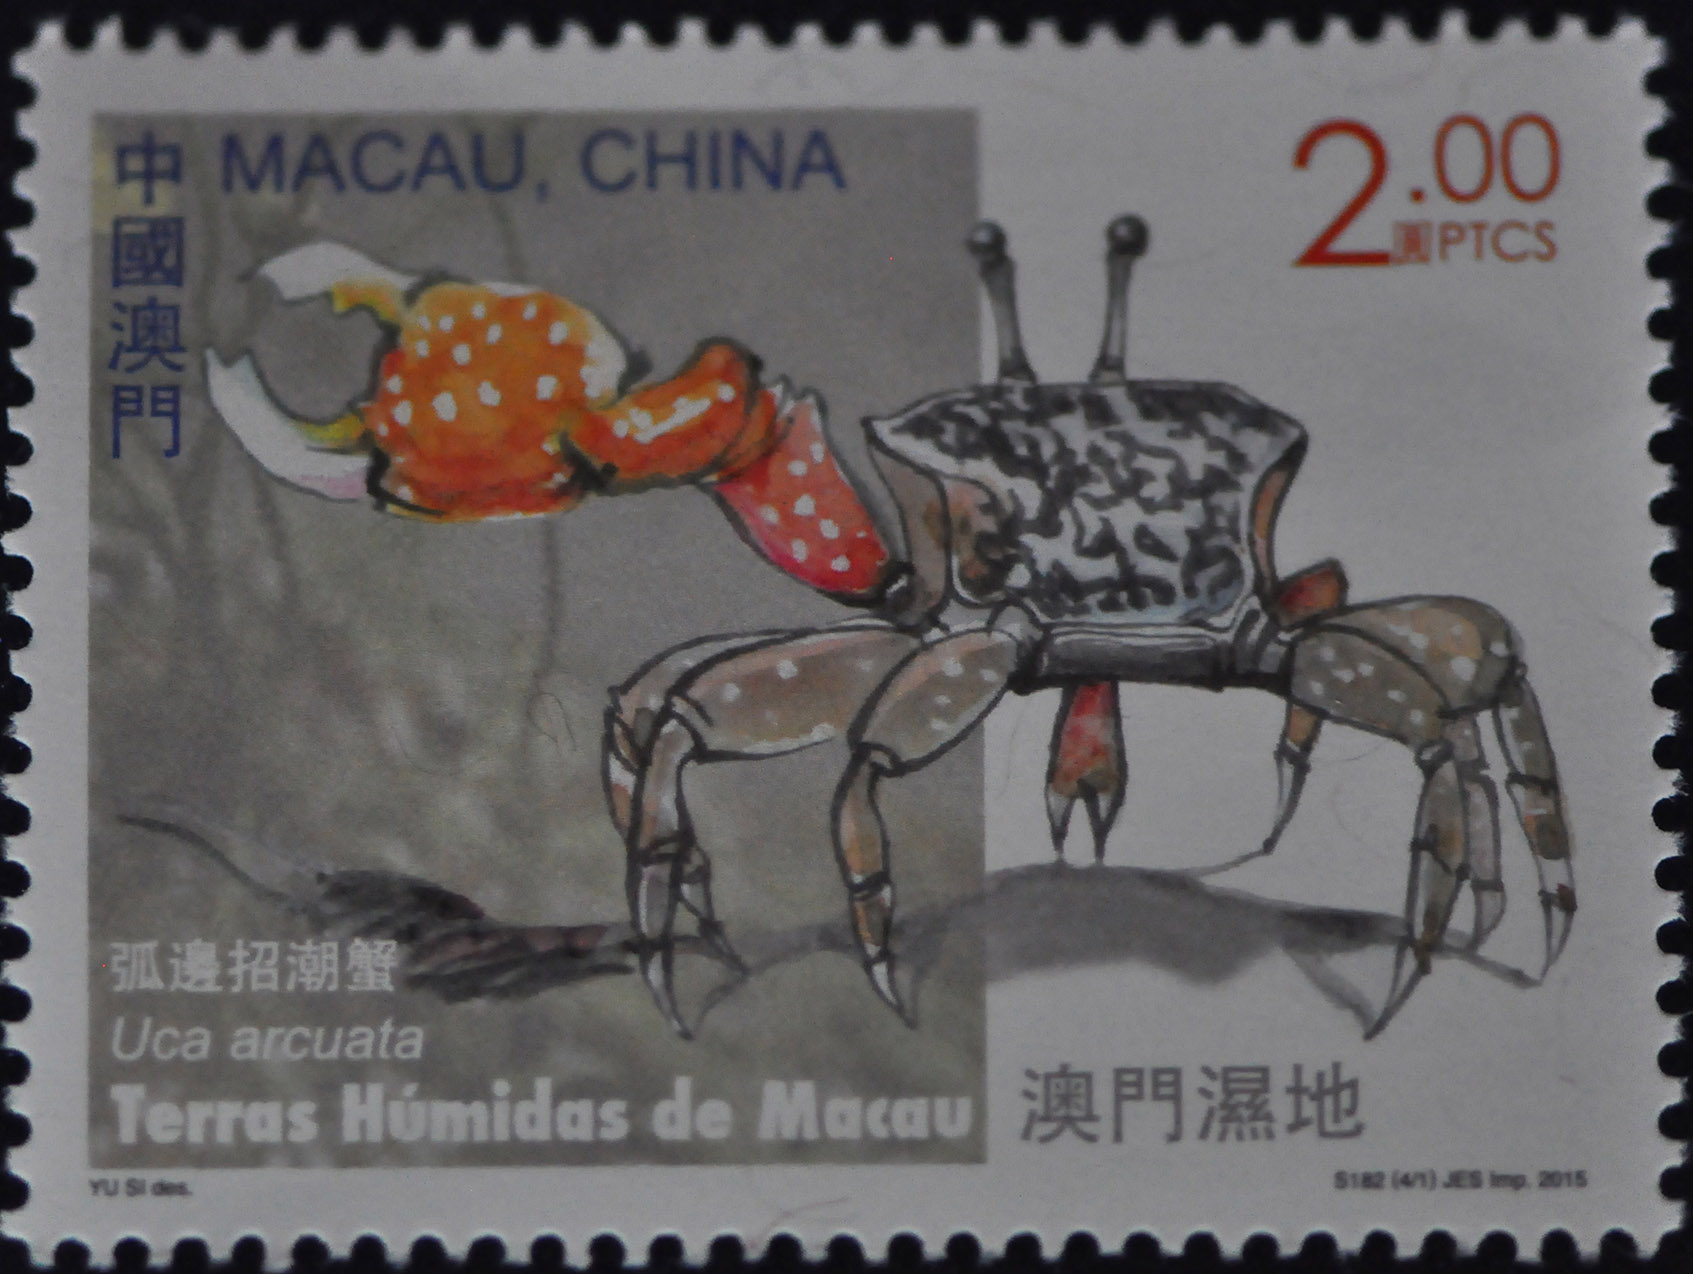 Postage Stamp: Macau, China (2015) image